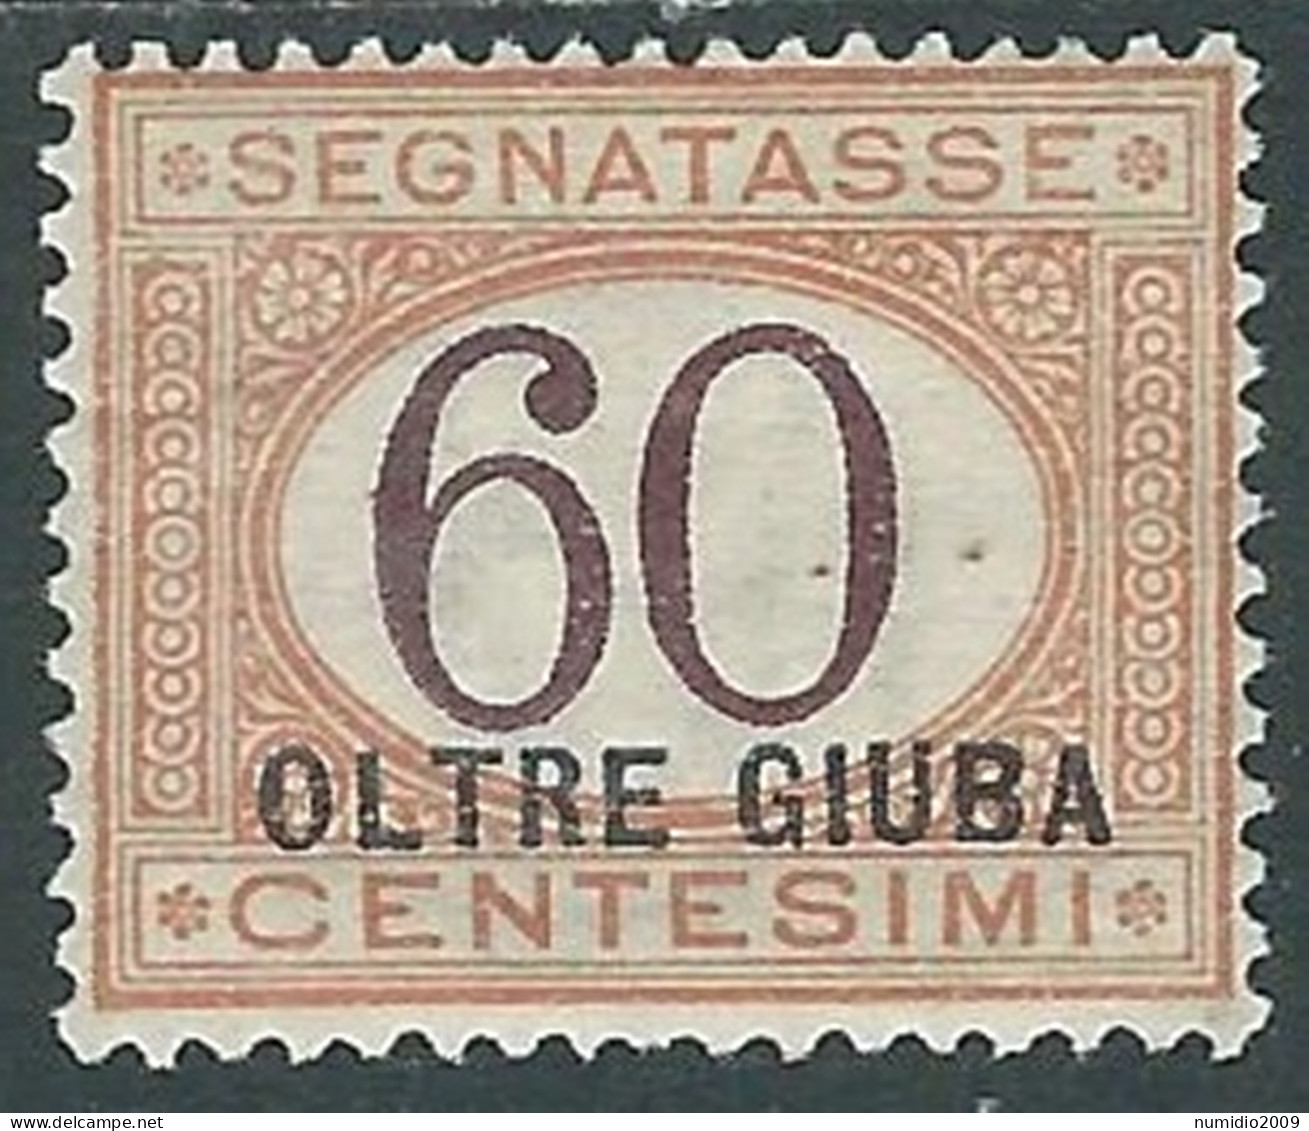 1925 OLTRE GIUBA SEGNATASSE 60 CENT MH * - I55-2 - Oltre Giuba